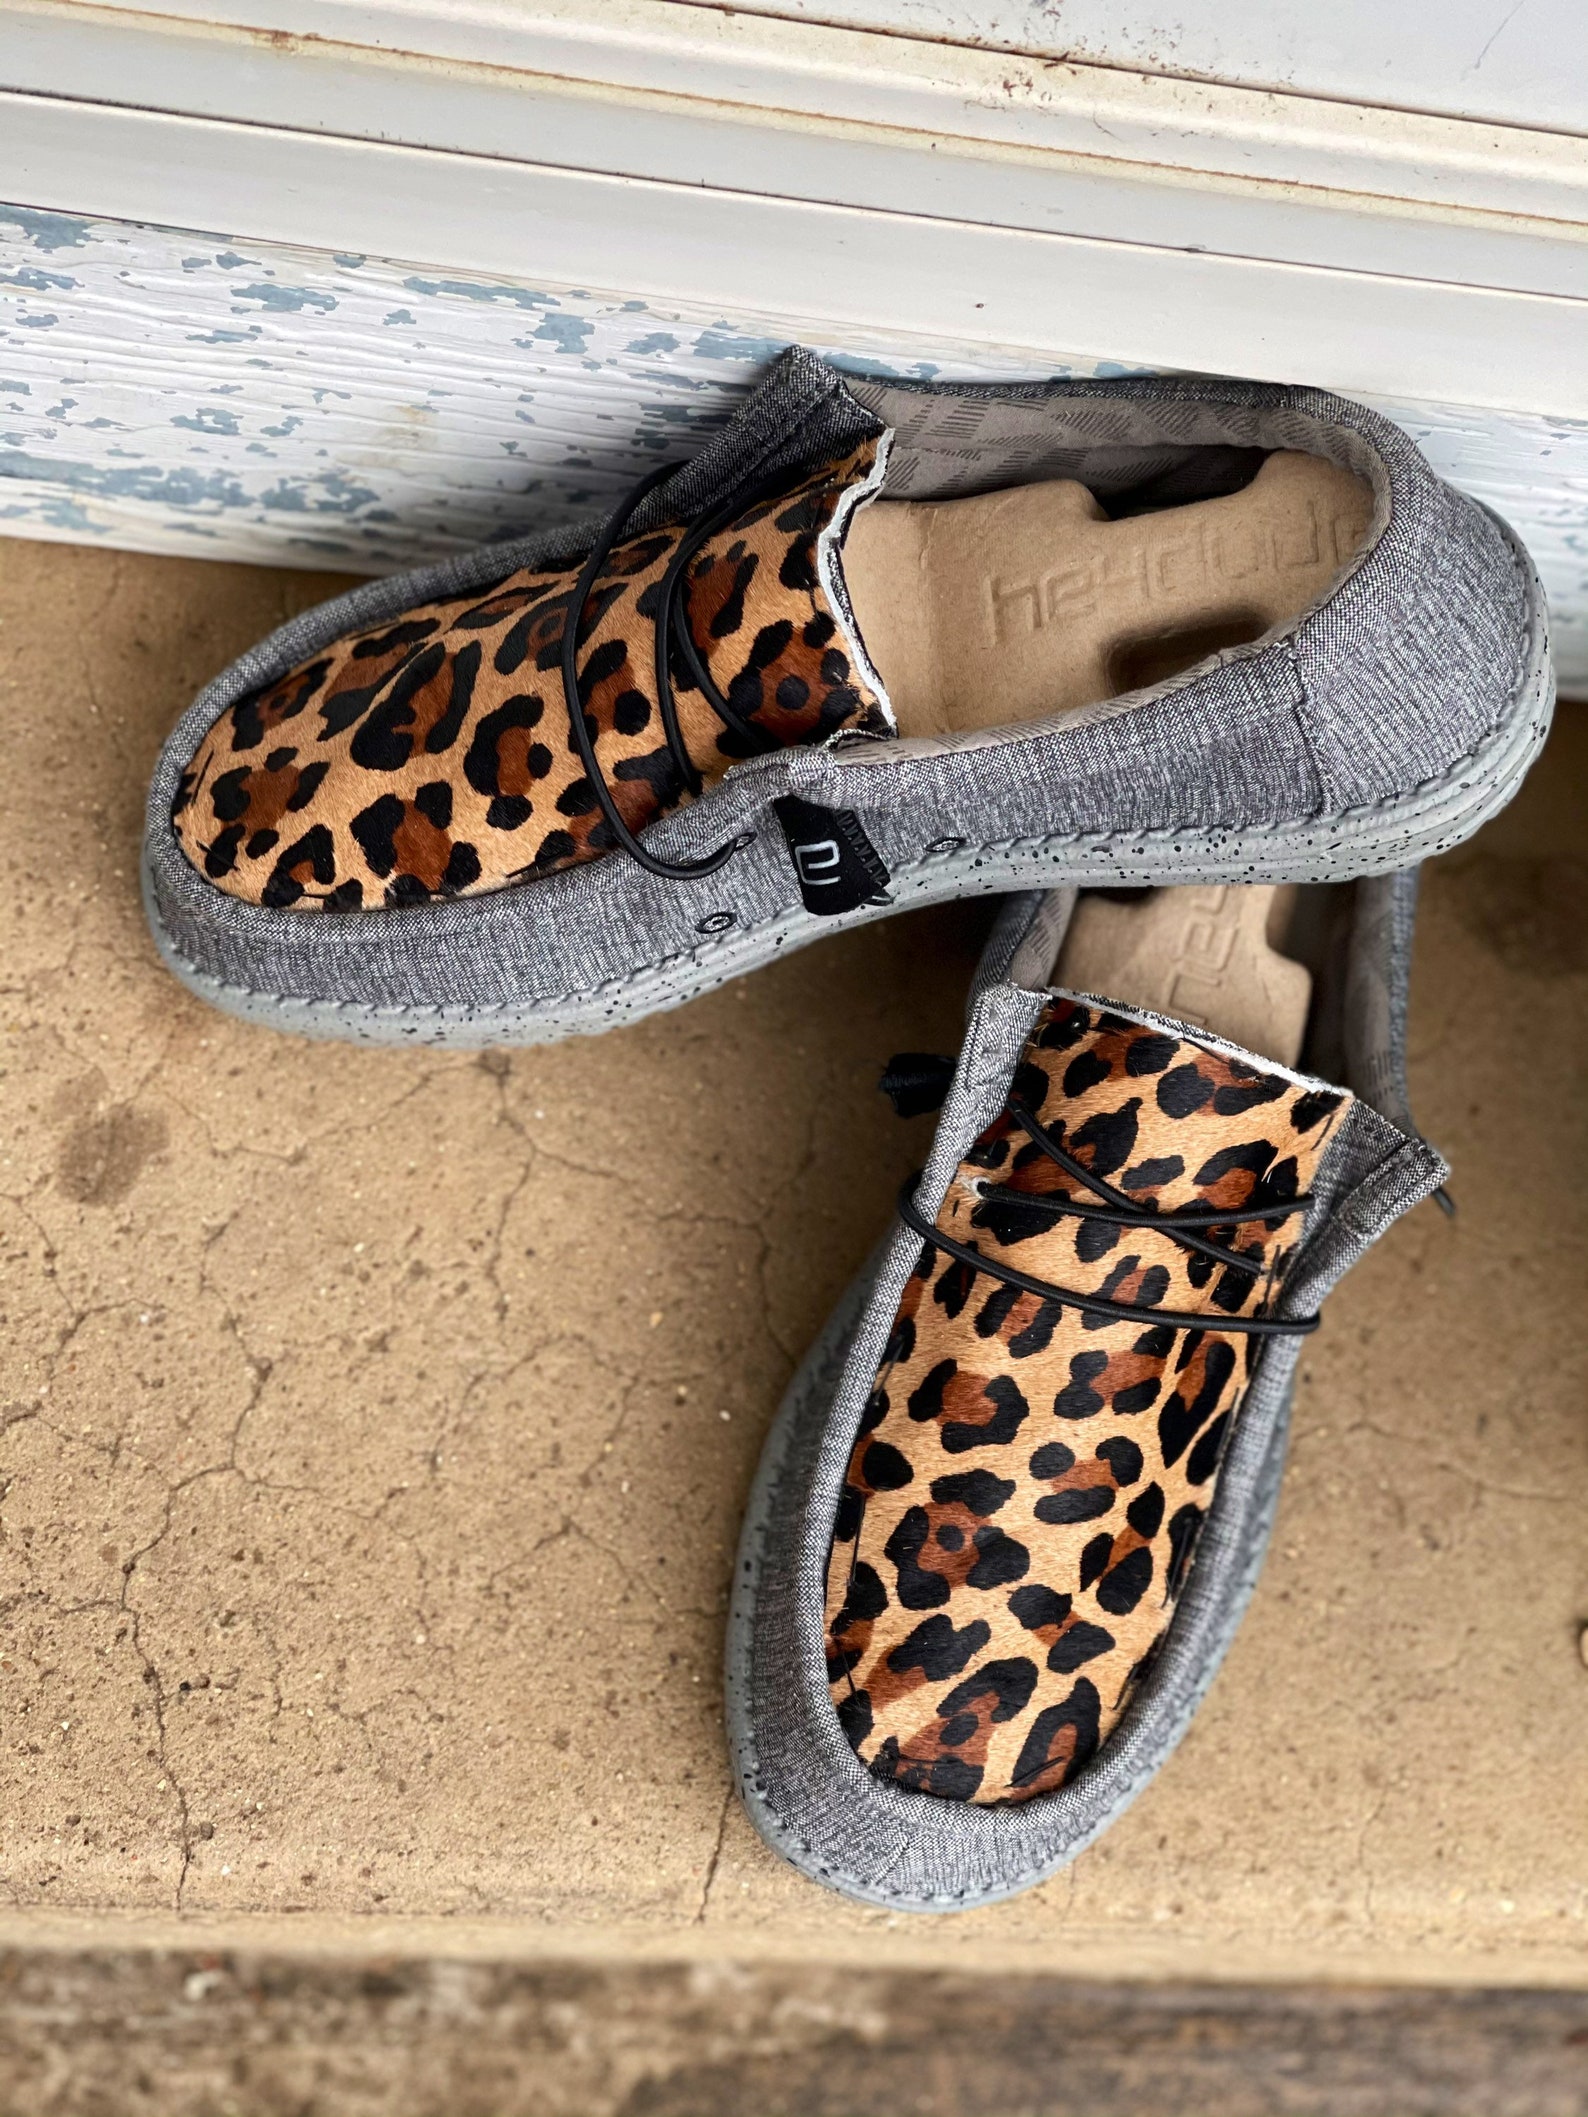 Cheetah Hide Hey Dude Shoes | Etsy